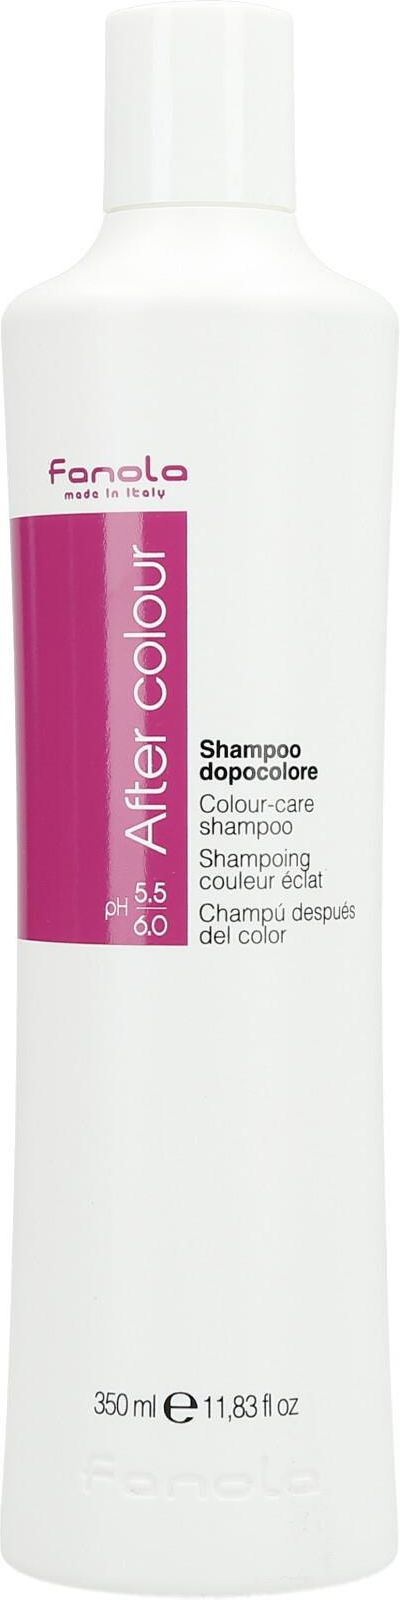 fanola after colour colour-care shampoo szampon do włosów farbowanych